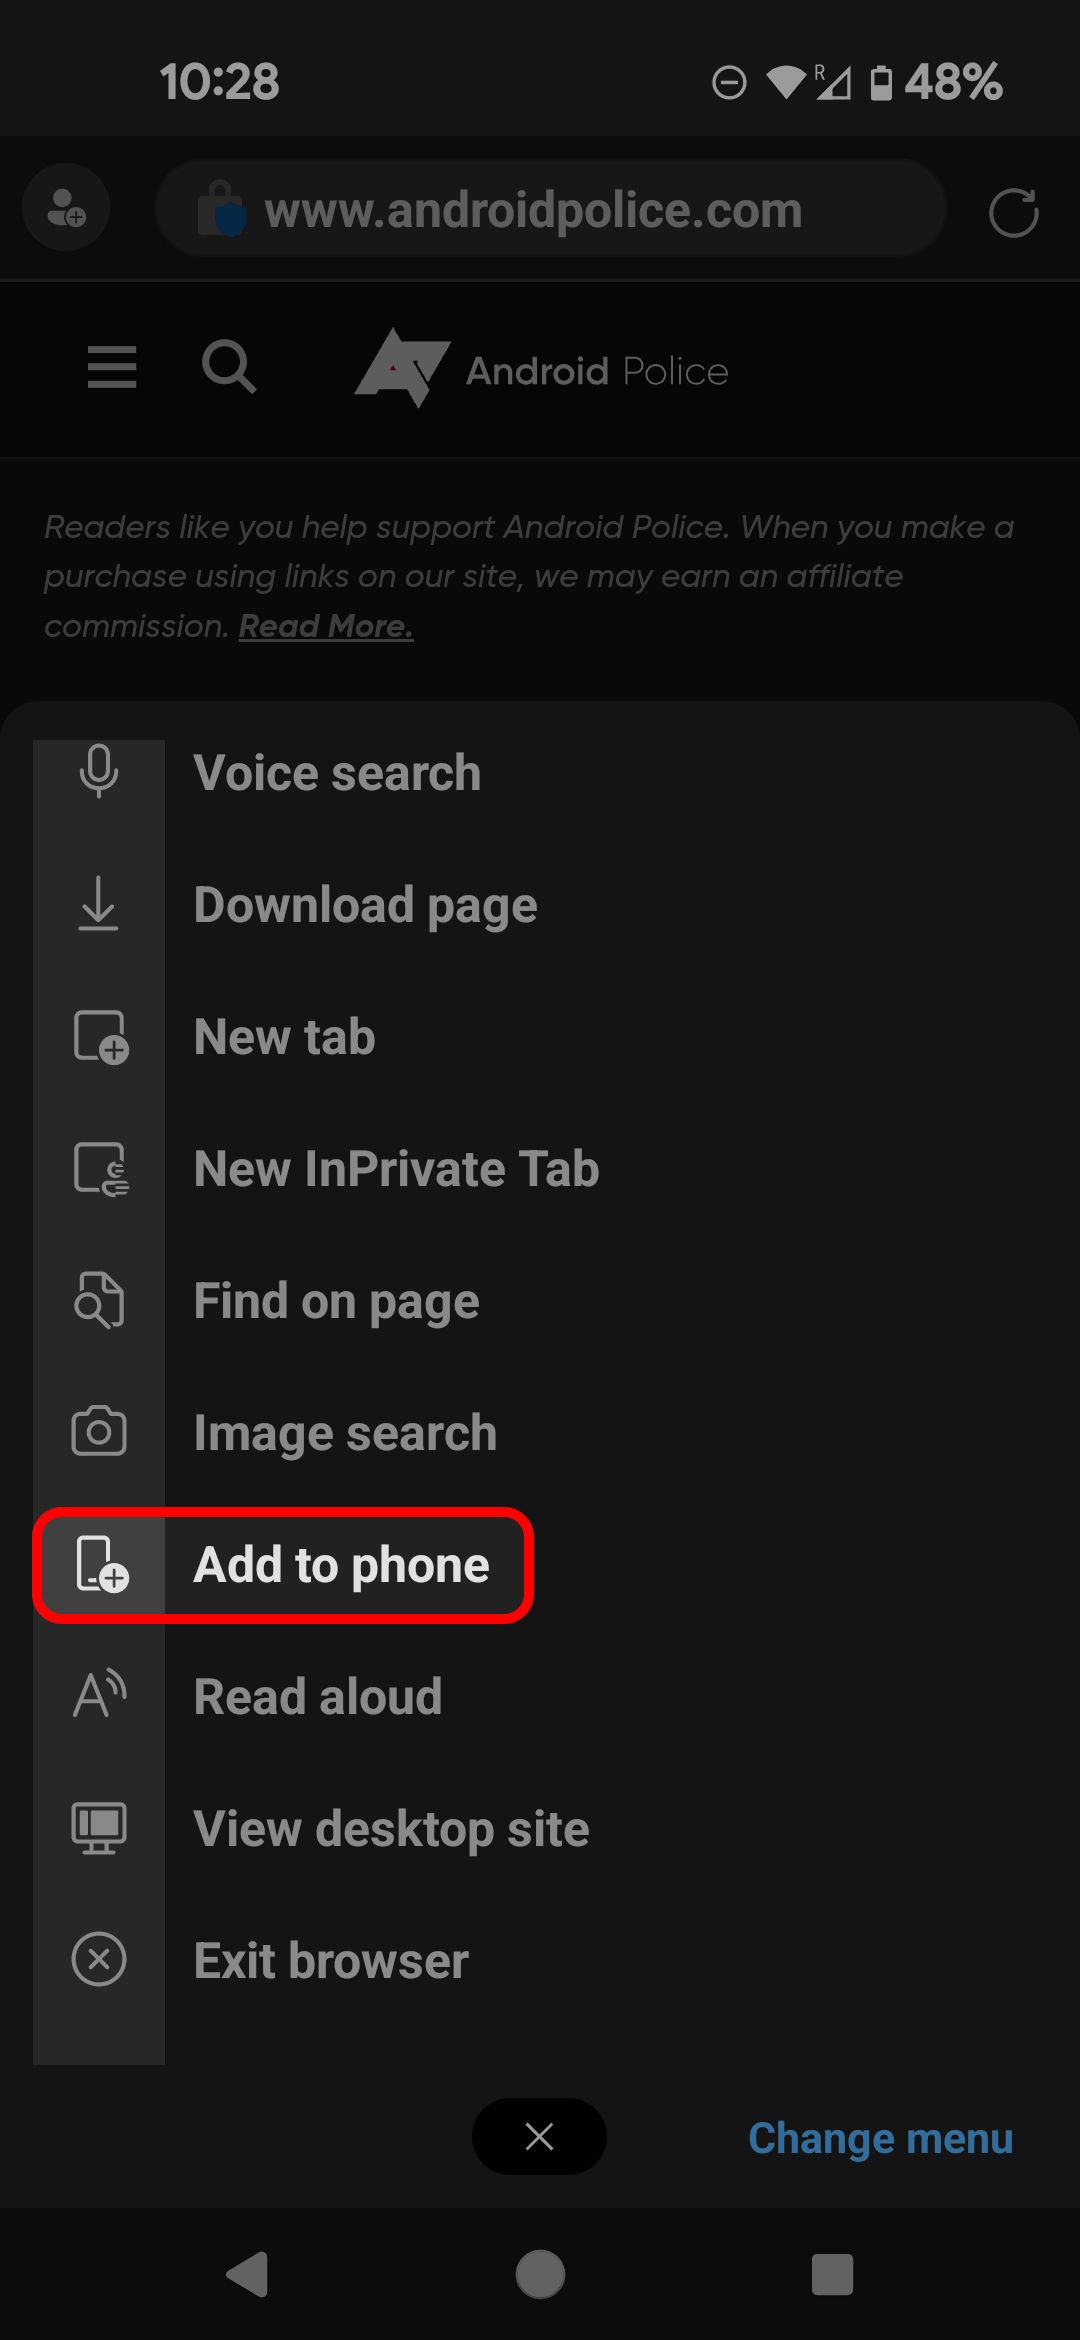 Microsoft Edge mobile more options menu highlighting the Add to phone option